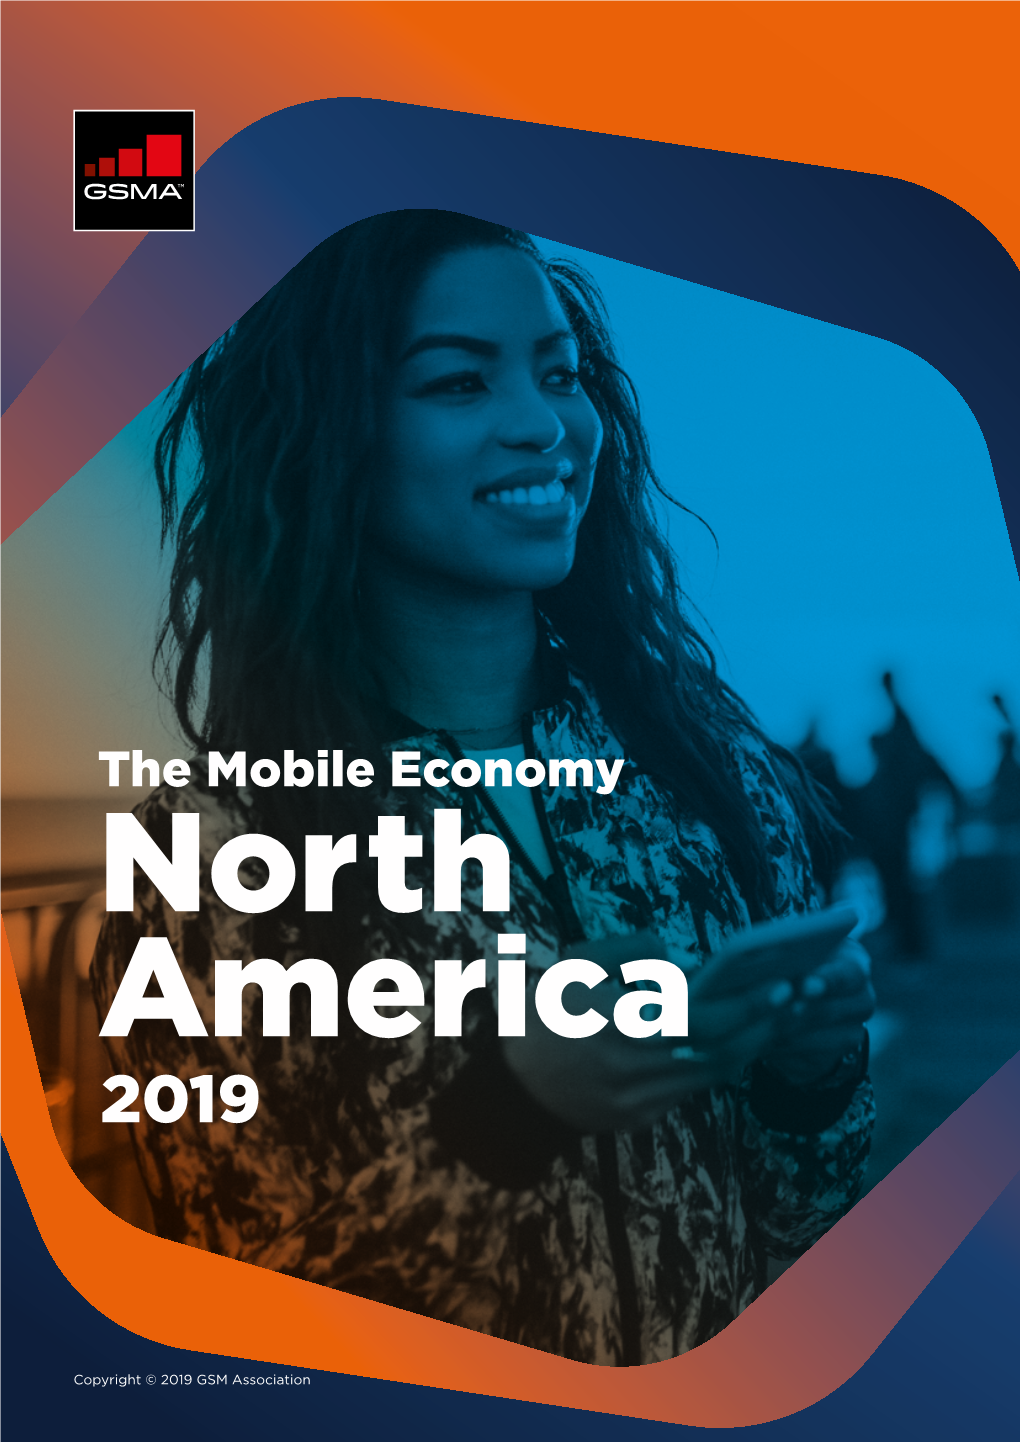 The Mobile Economy North America 2019